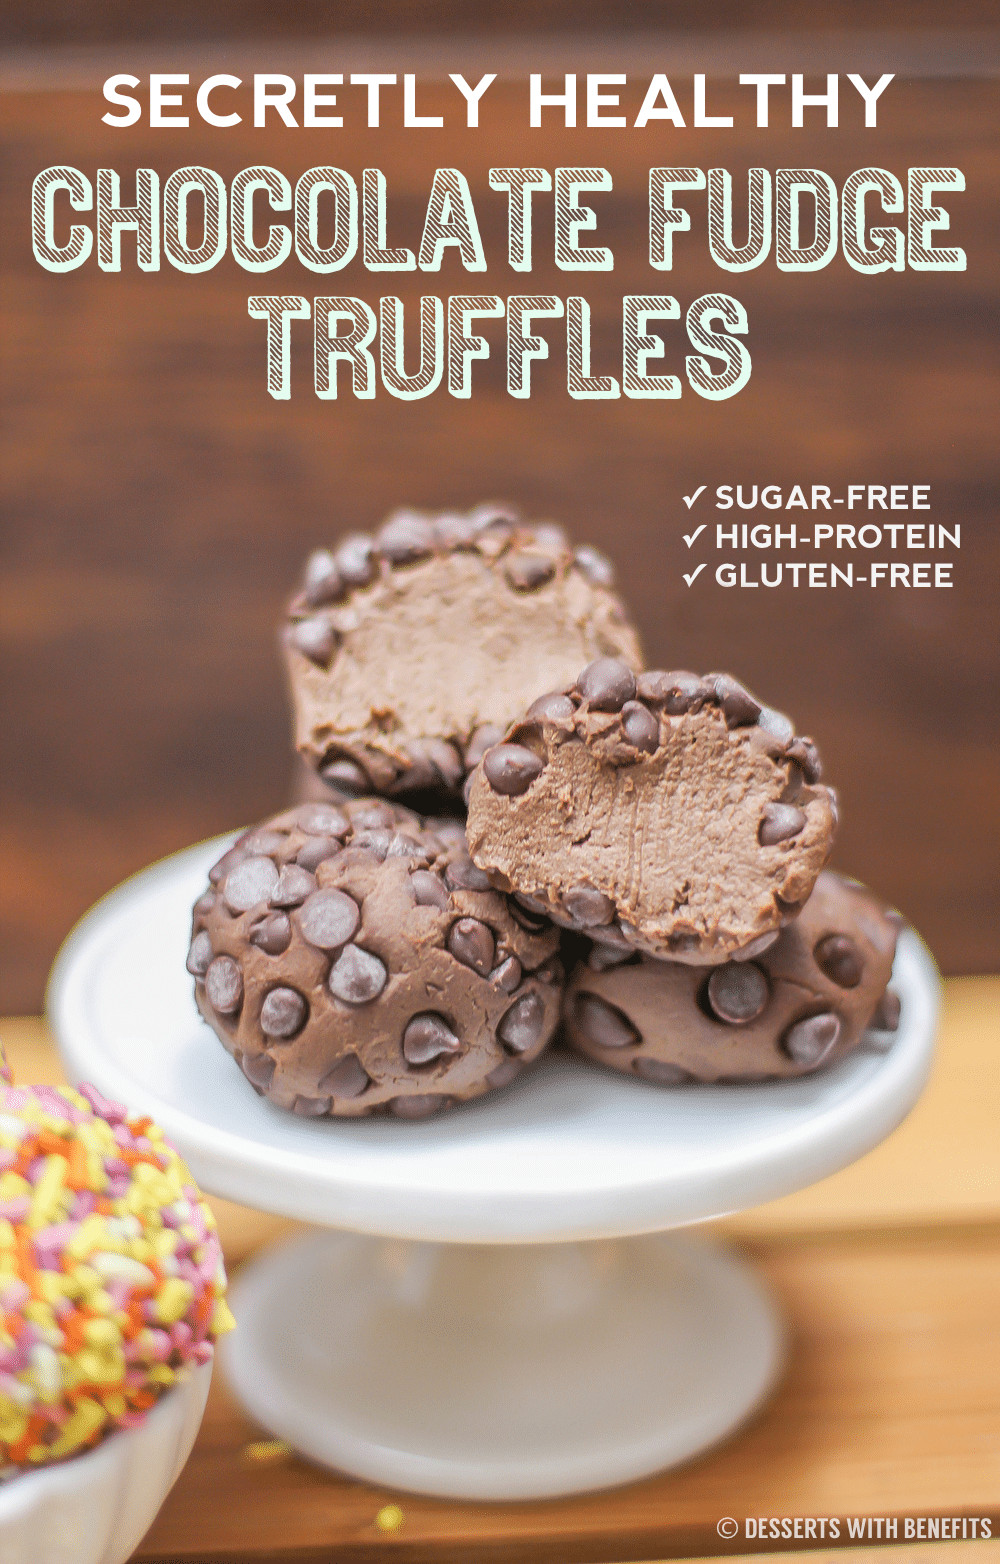 Healthy Low Fat Desserts
 Healthy Chocolate Fudge Truffles Recipe